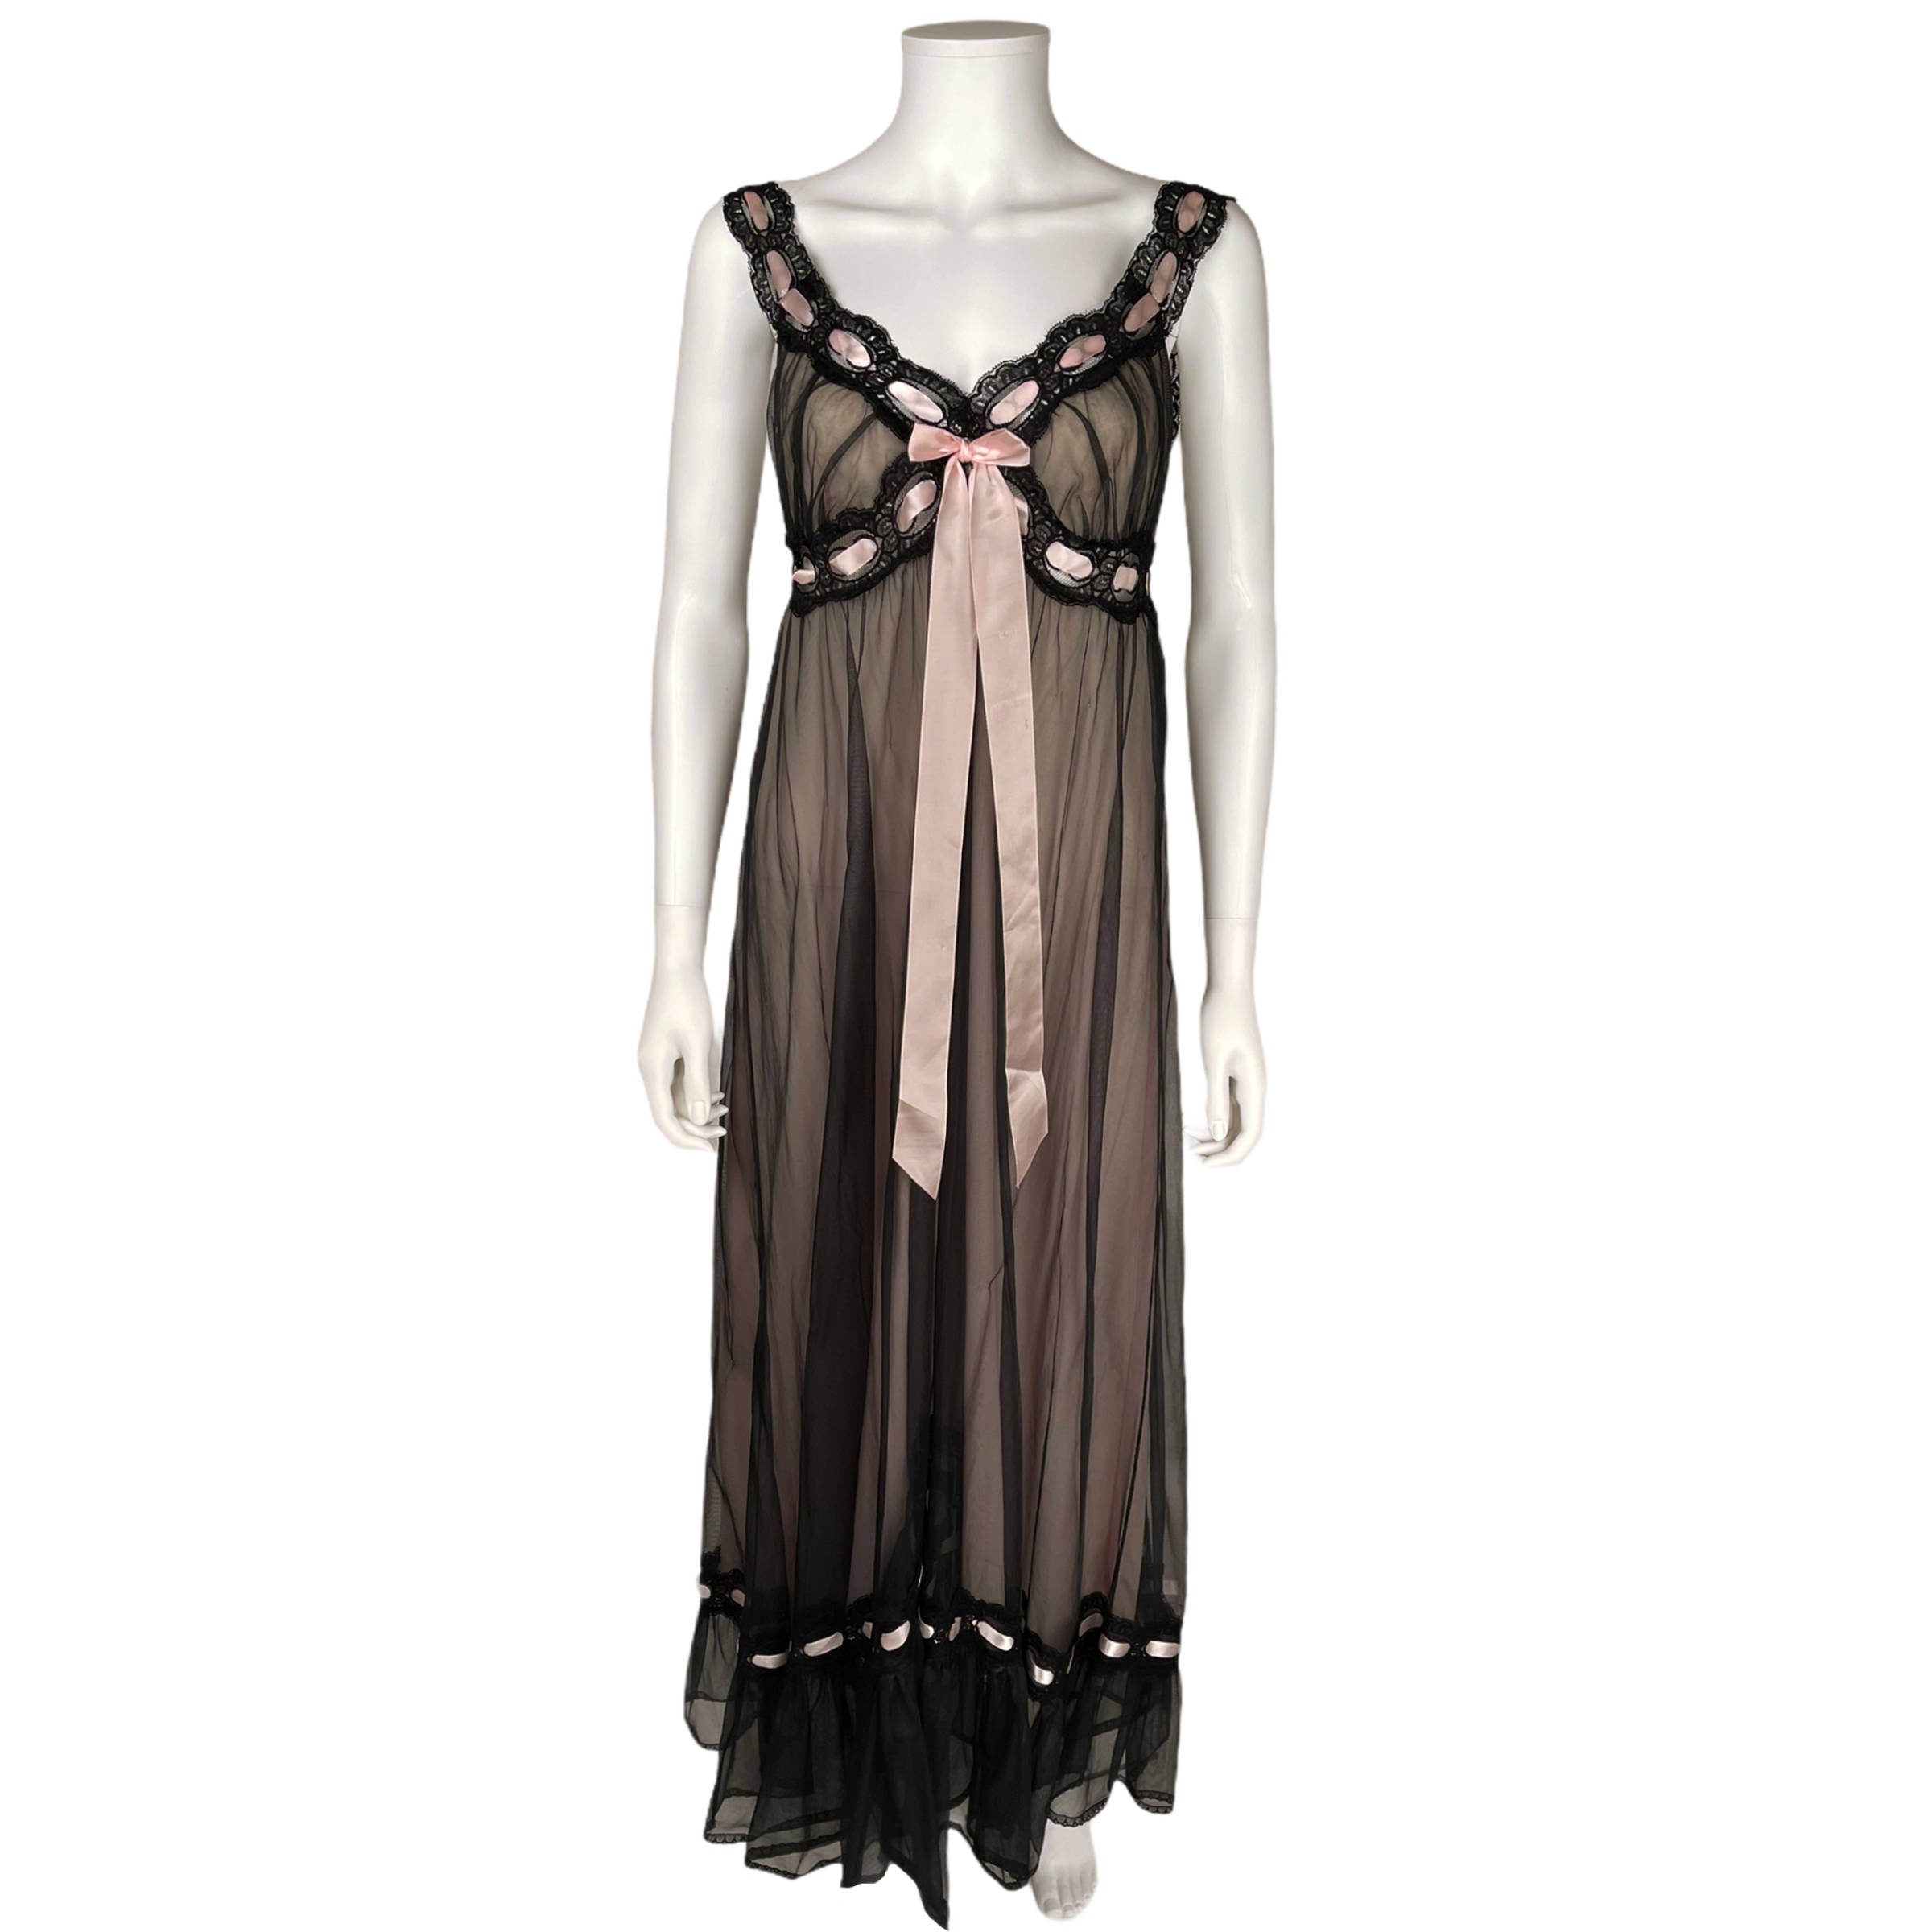 Vintage 60s Black Nylon Nightie Nightgown Saxon Lingerie